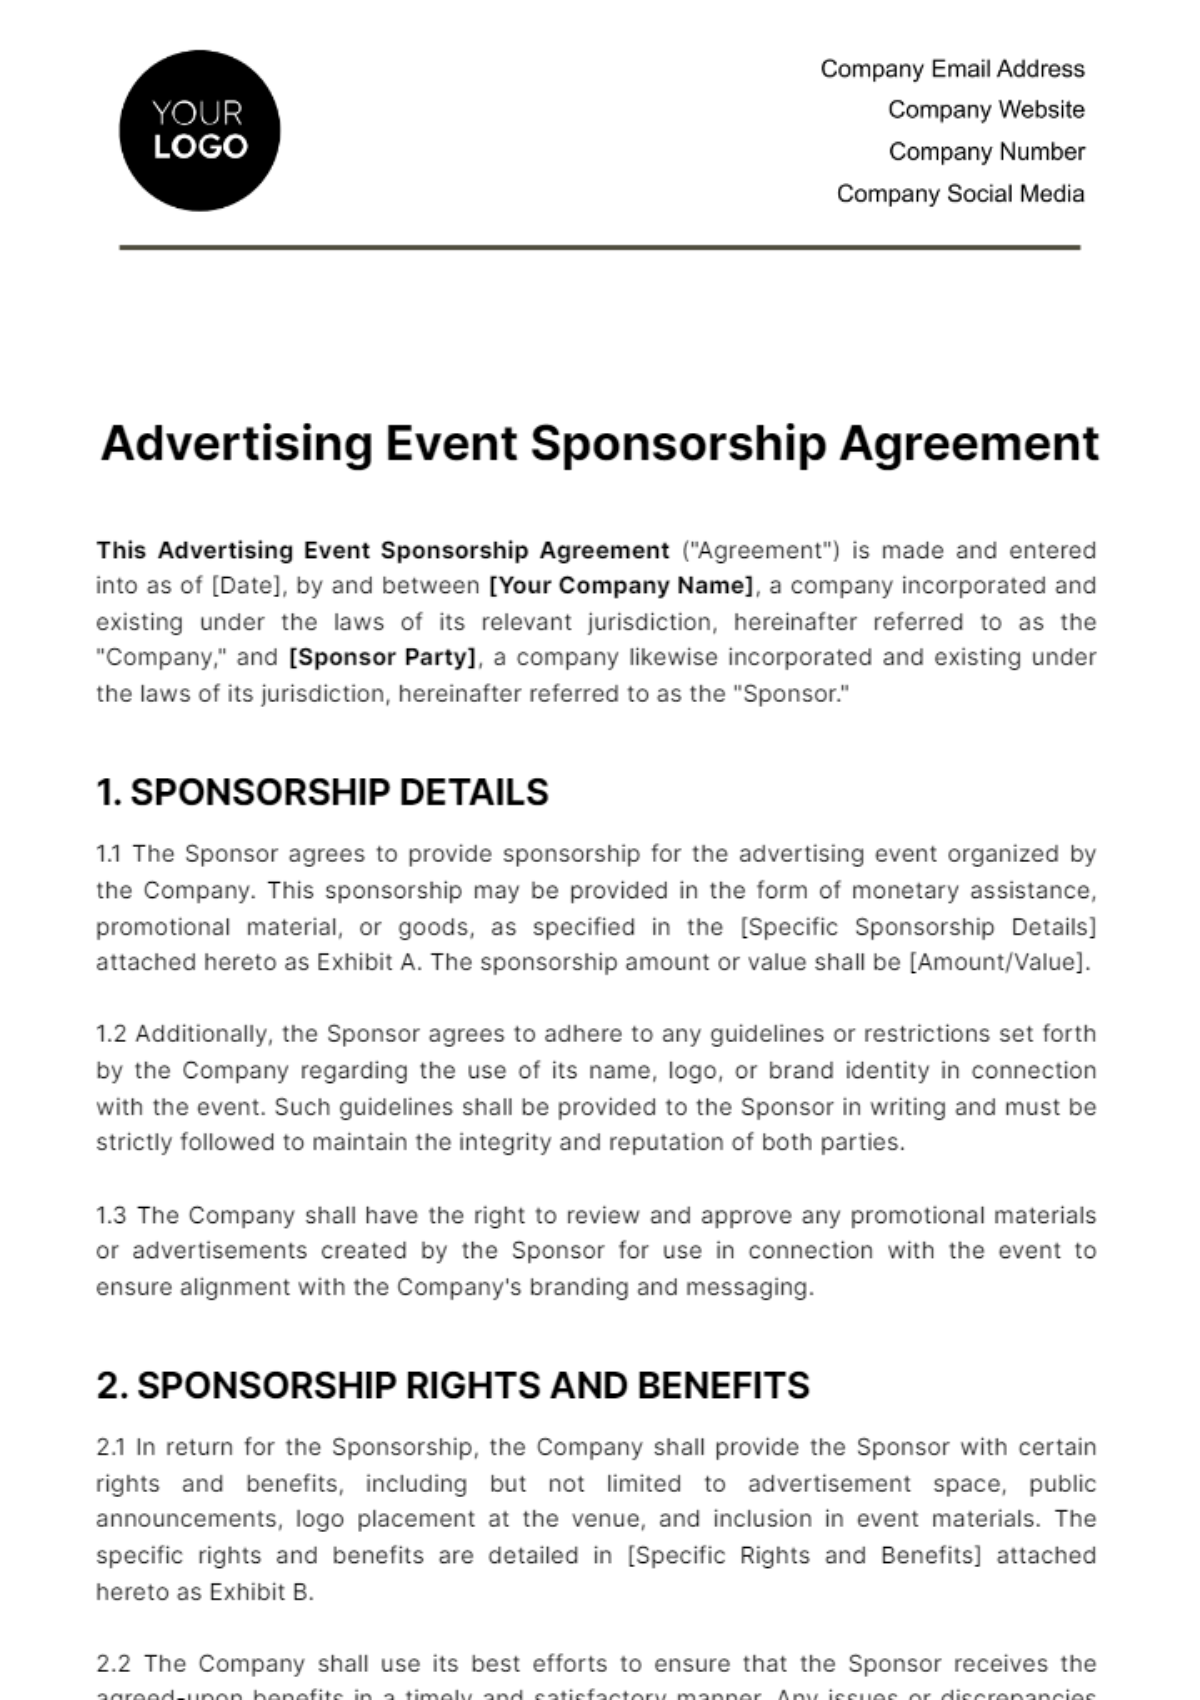 Advertising Event Sponsorship Agreement Template